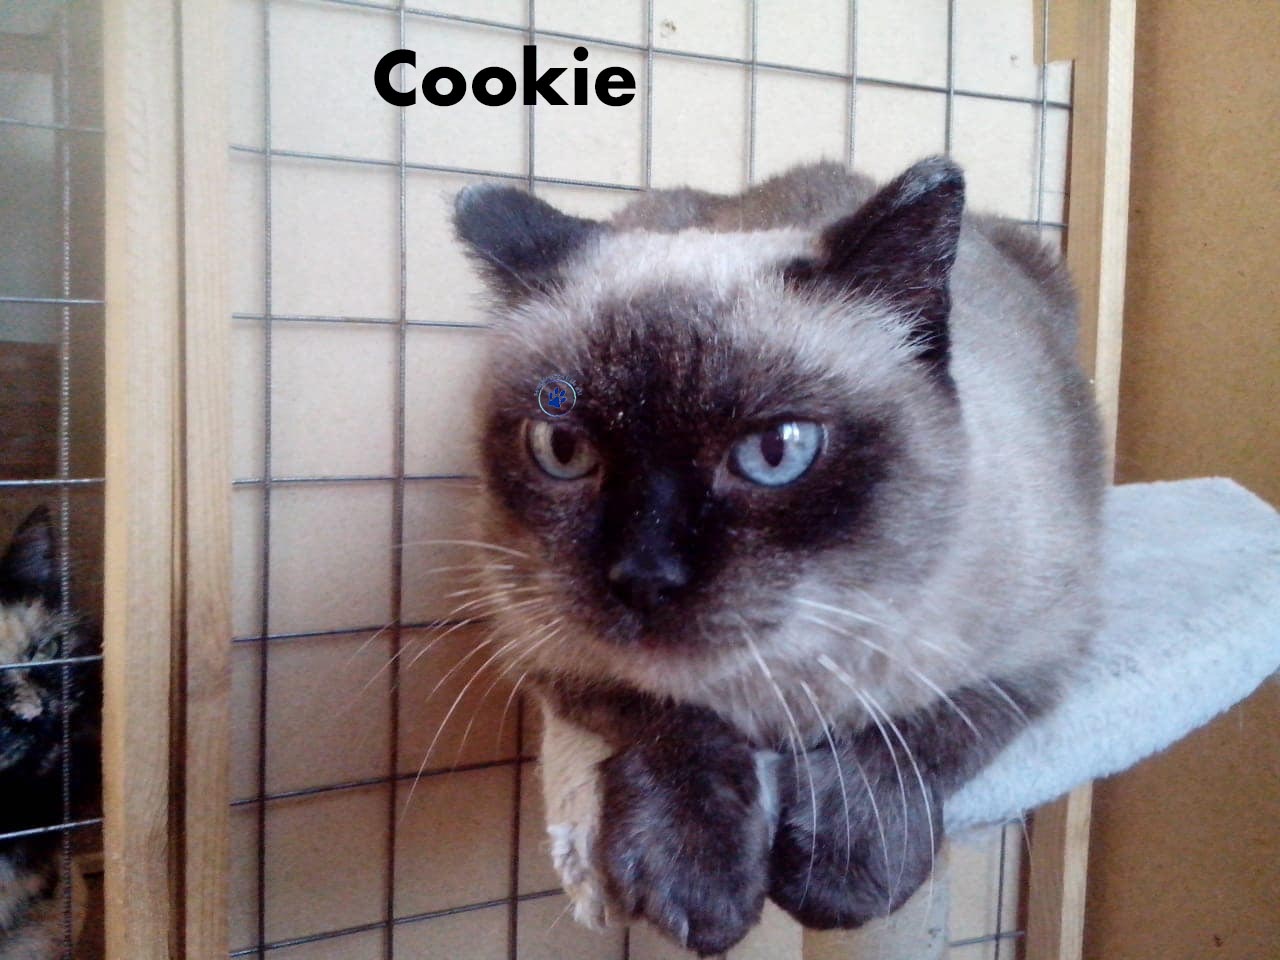 Nikolai/Katzen/Cookie/Cookie08 Kopie.jpg